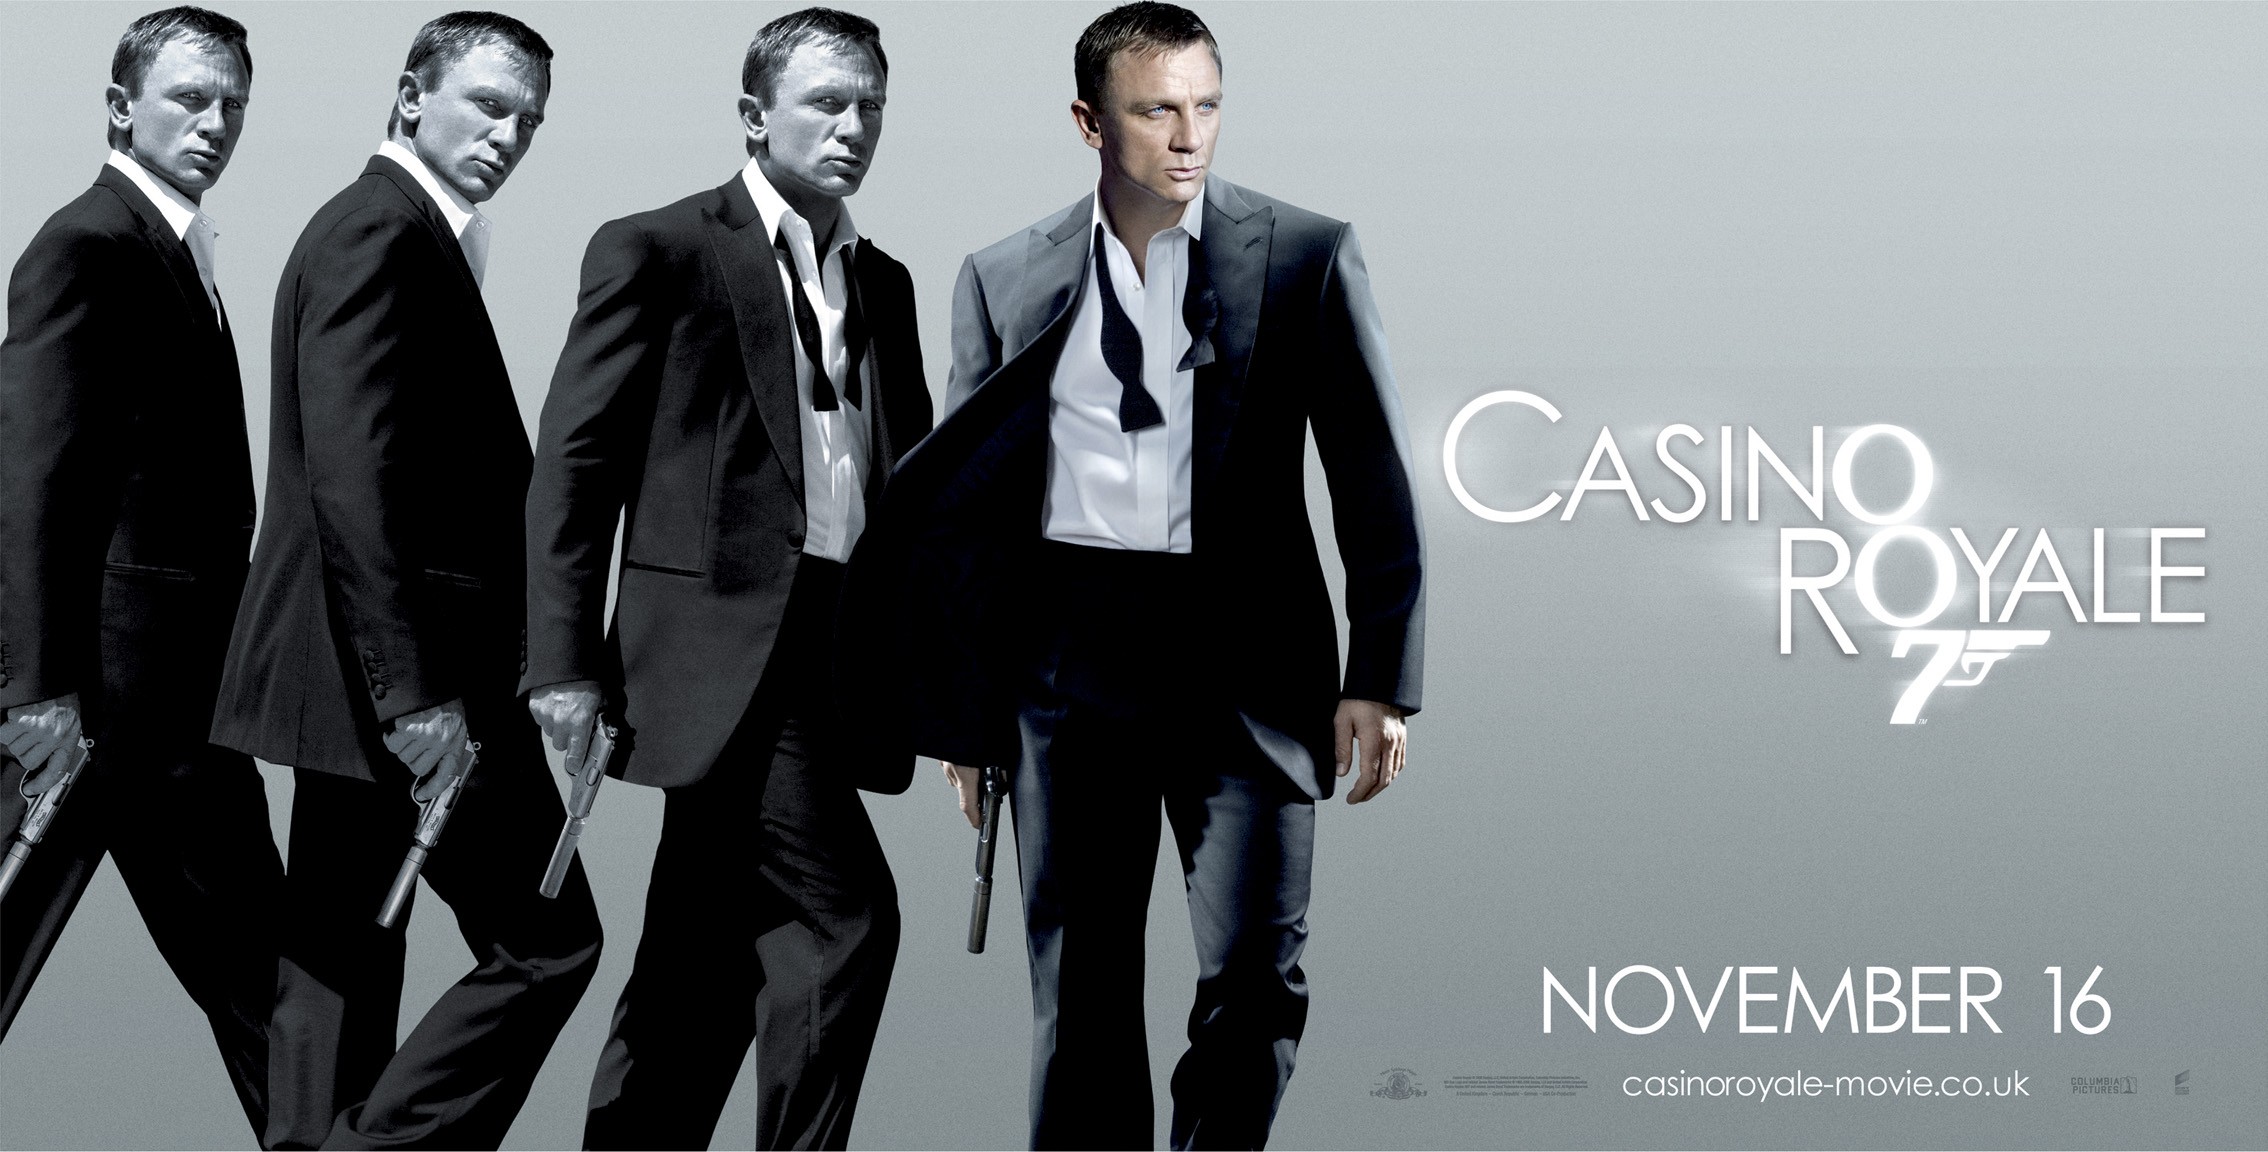 Mega Sized Movie Poster Image for Casino Royale (#11 of 11)